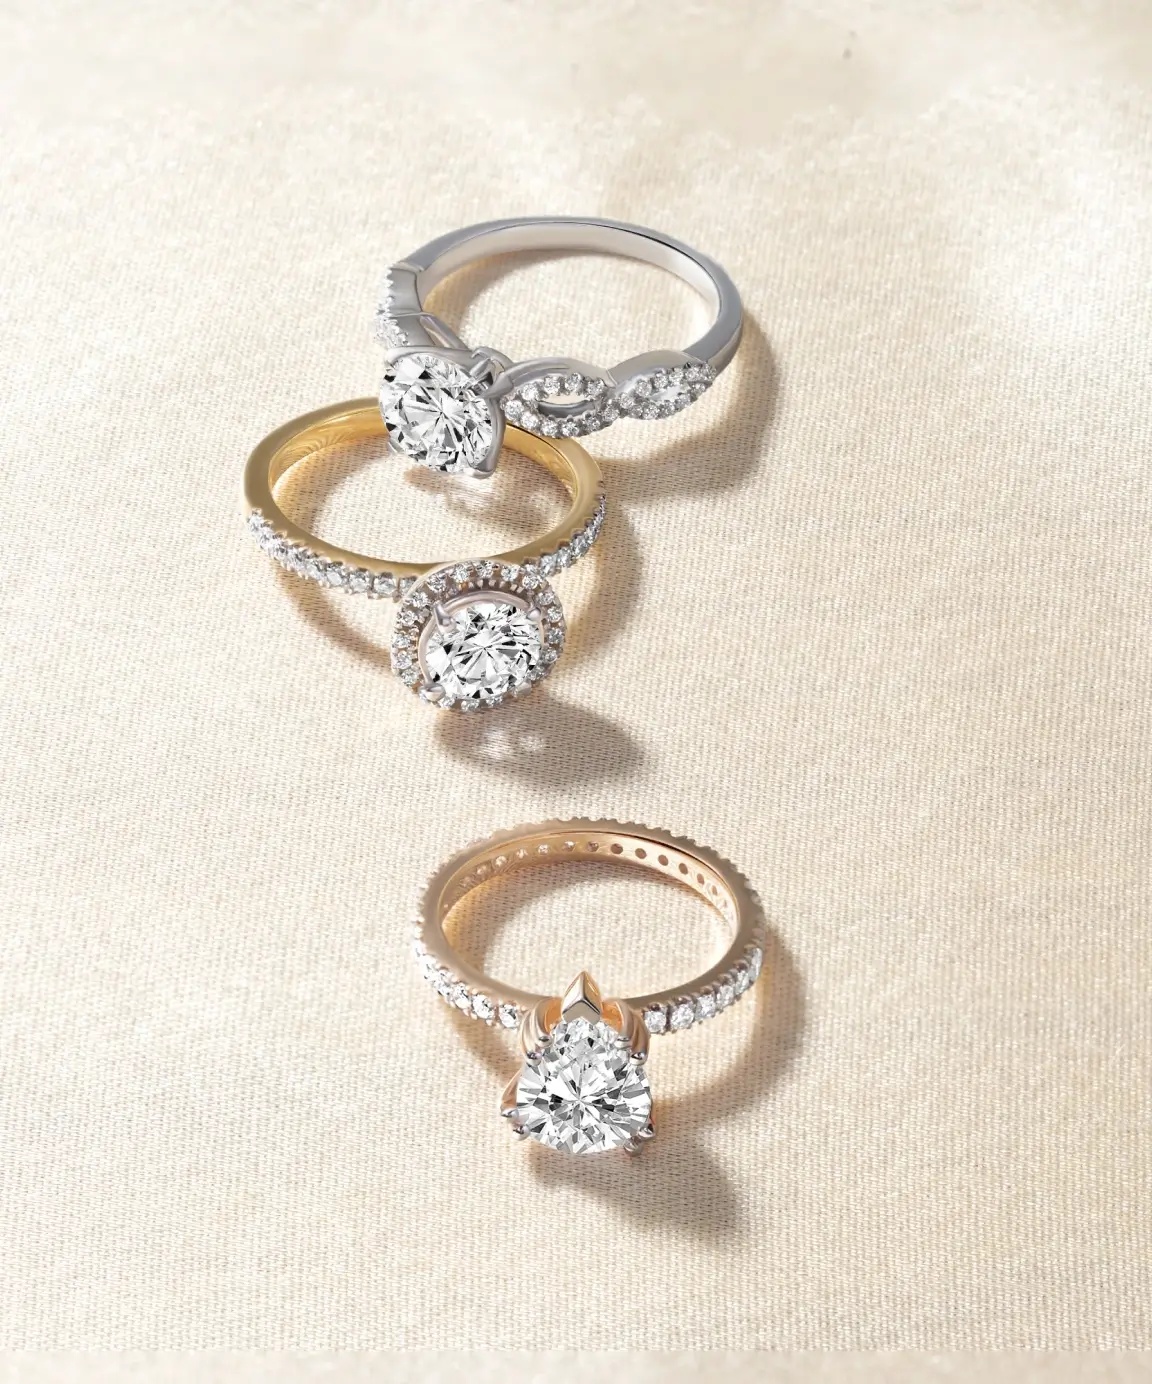 The World of Savings on Diamond Wedding Rings